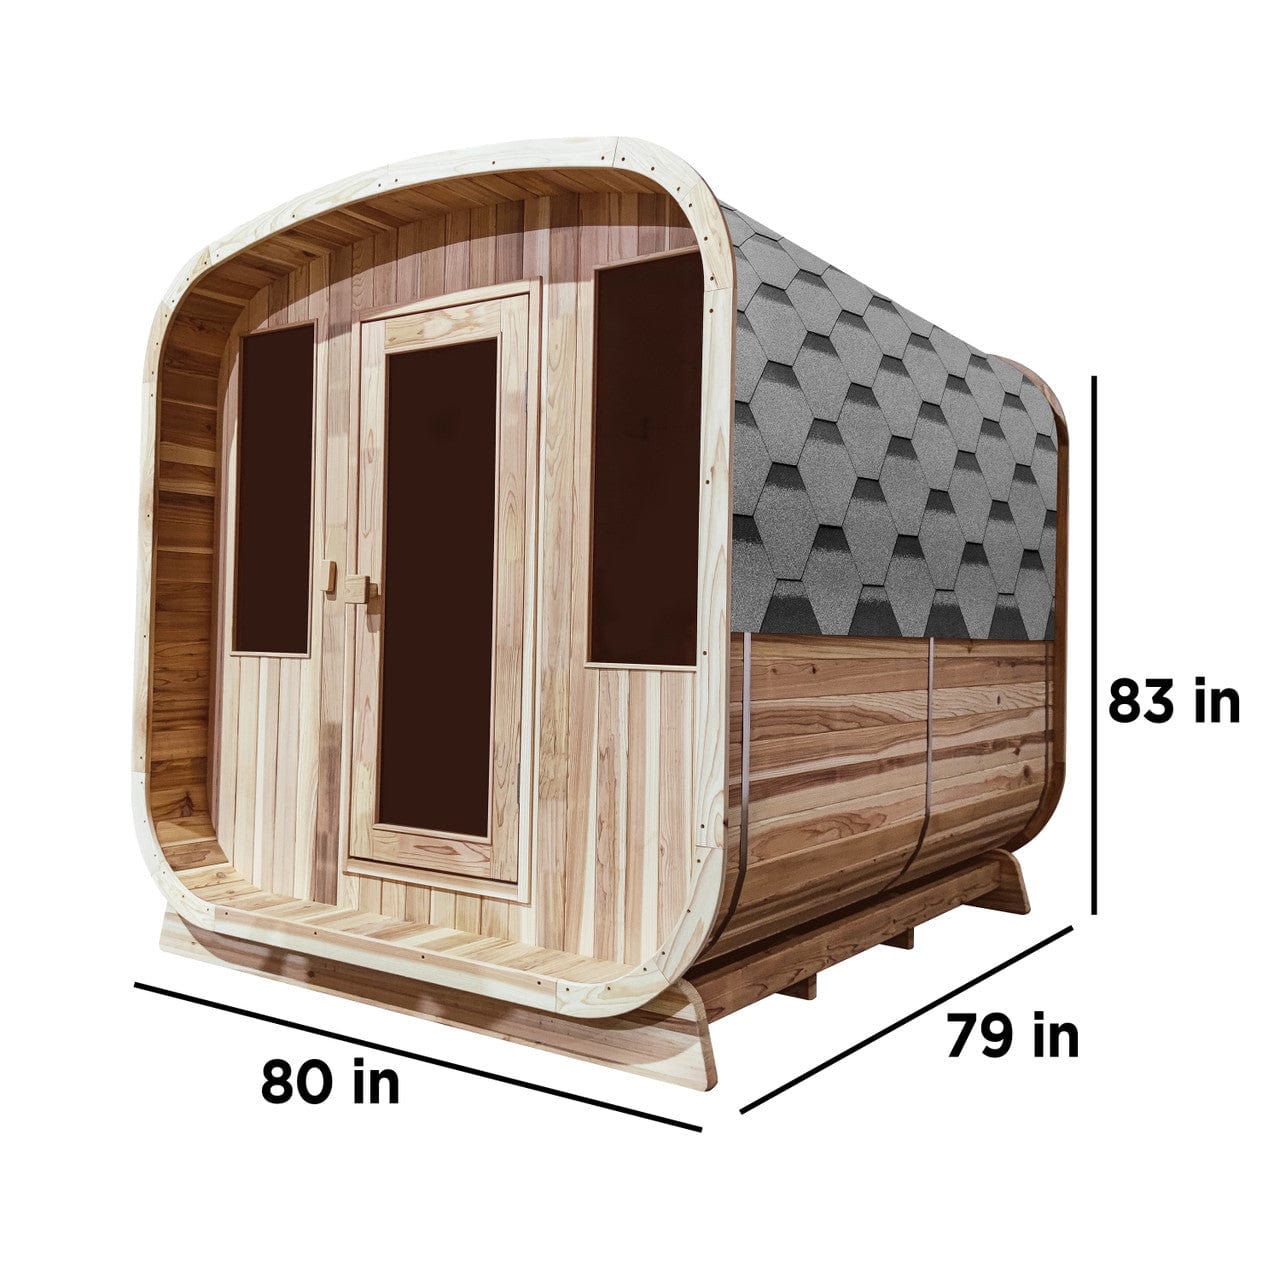 Aleko SRCE4HULL-AP Outdoor Rustic Cedar 4-Person Square Sauna with Bitumen shingle roofing